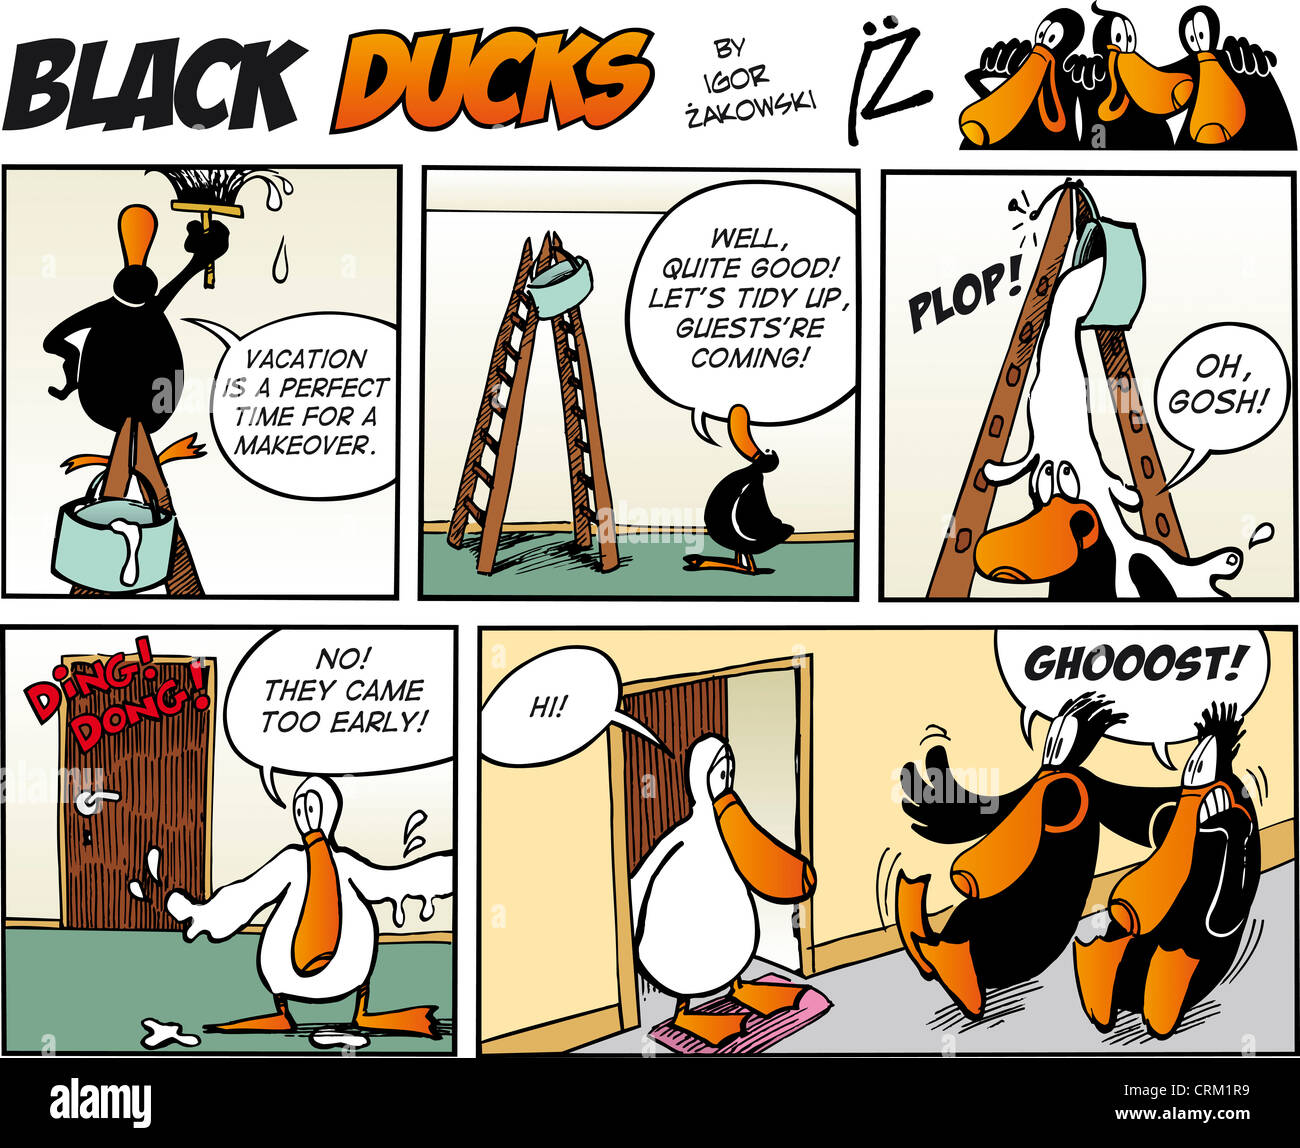 Black Ducks Comic Story episode 73 Stock Photo